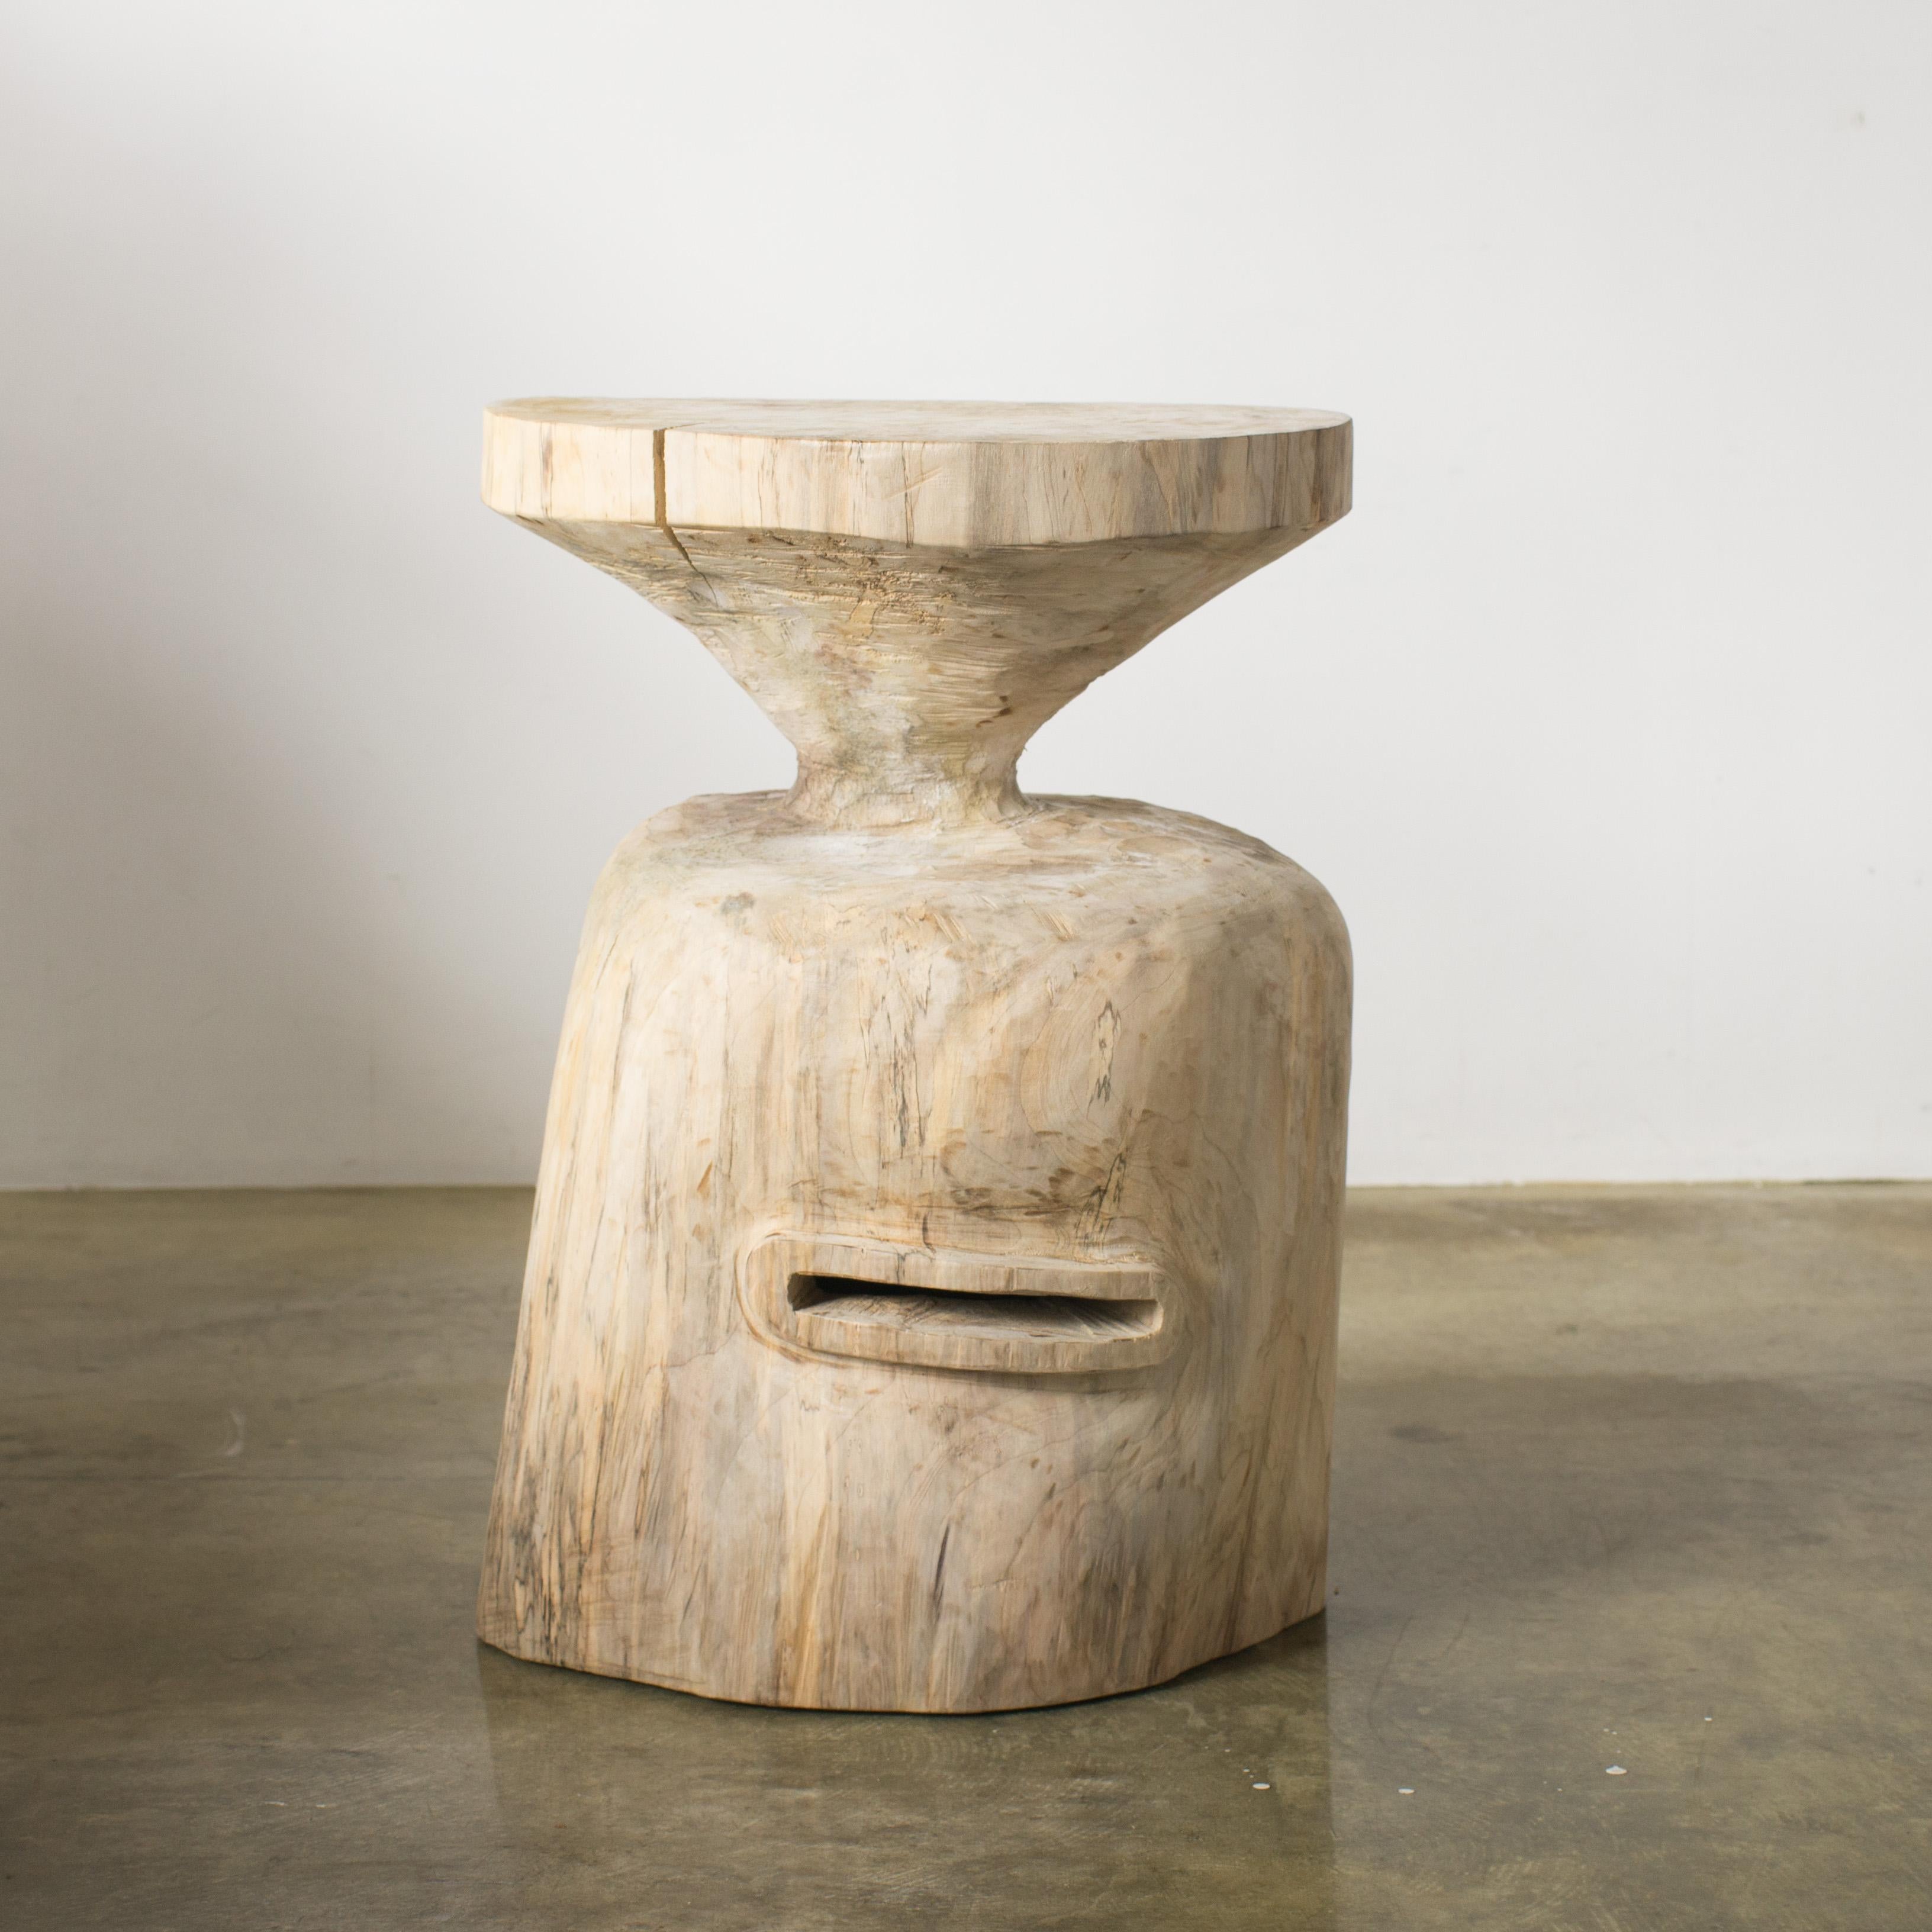 Japanese Hiroyuki Nishimura and Zogei Furniture Sculptural Wood Stool9-04 Tribal Glamping